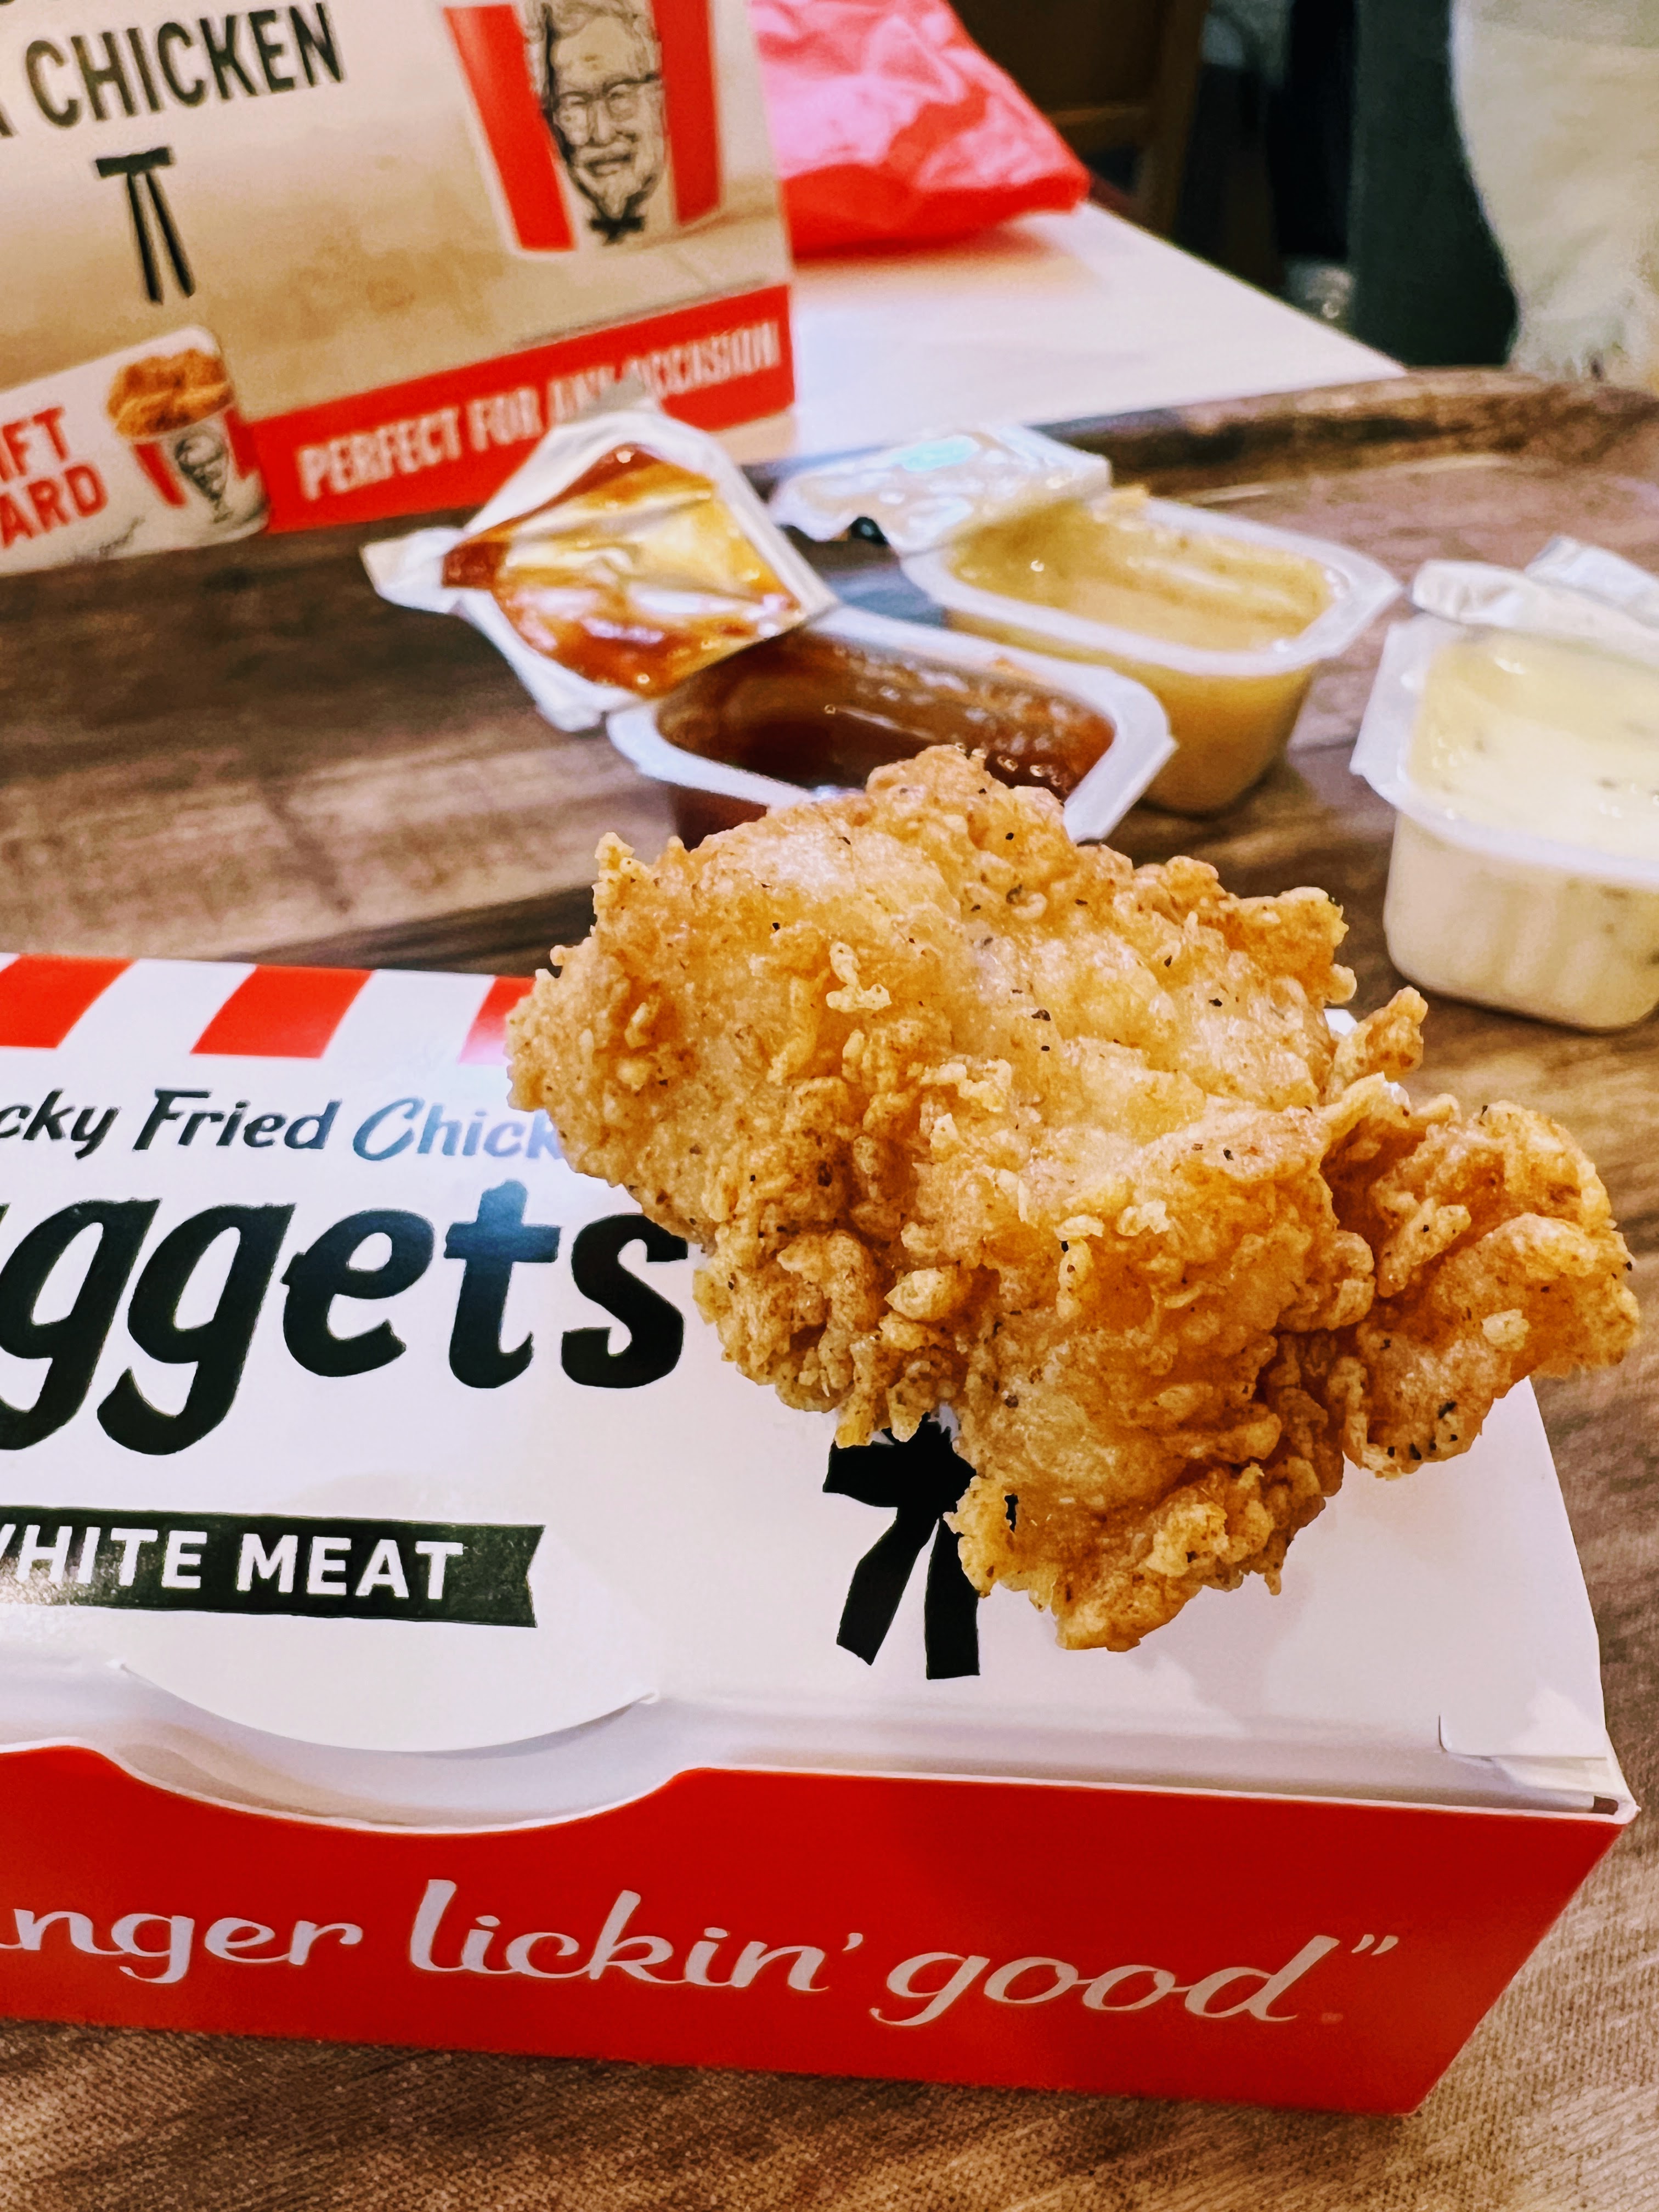 KFC Nuggets